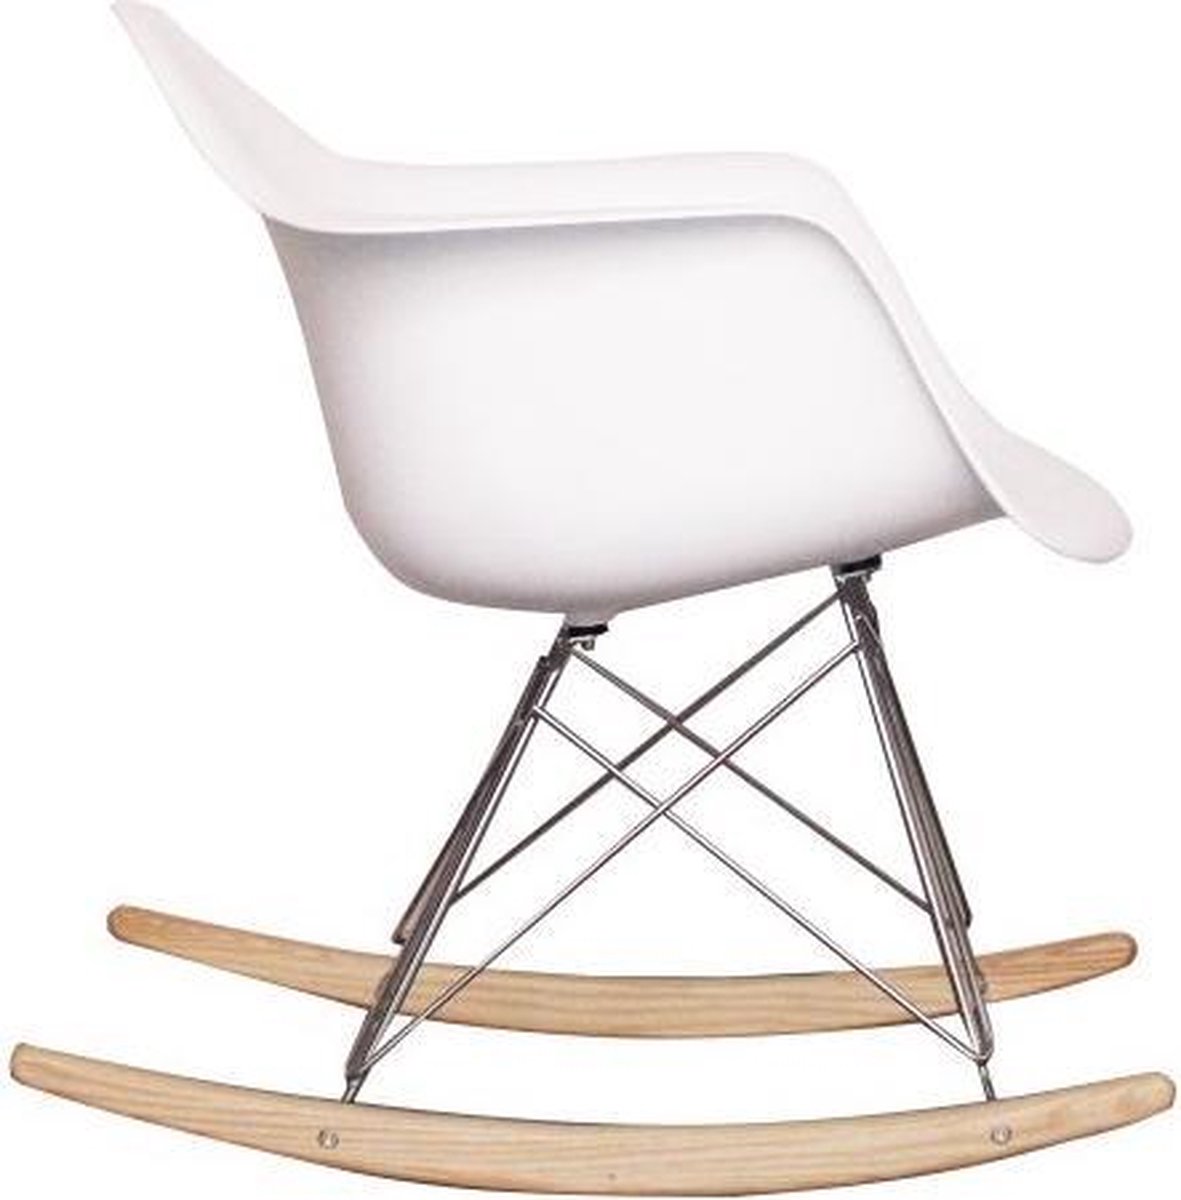 RAR replica Schommelstoel wit Rocking Chair | bol.com